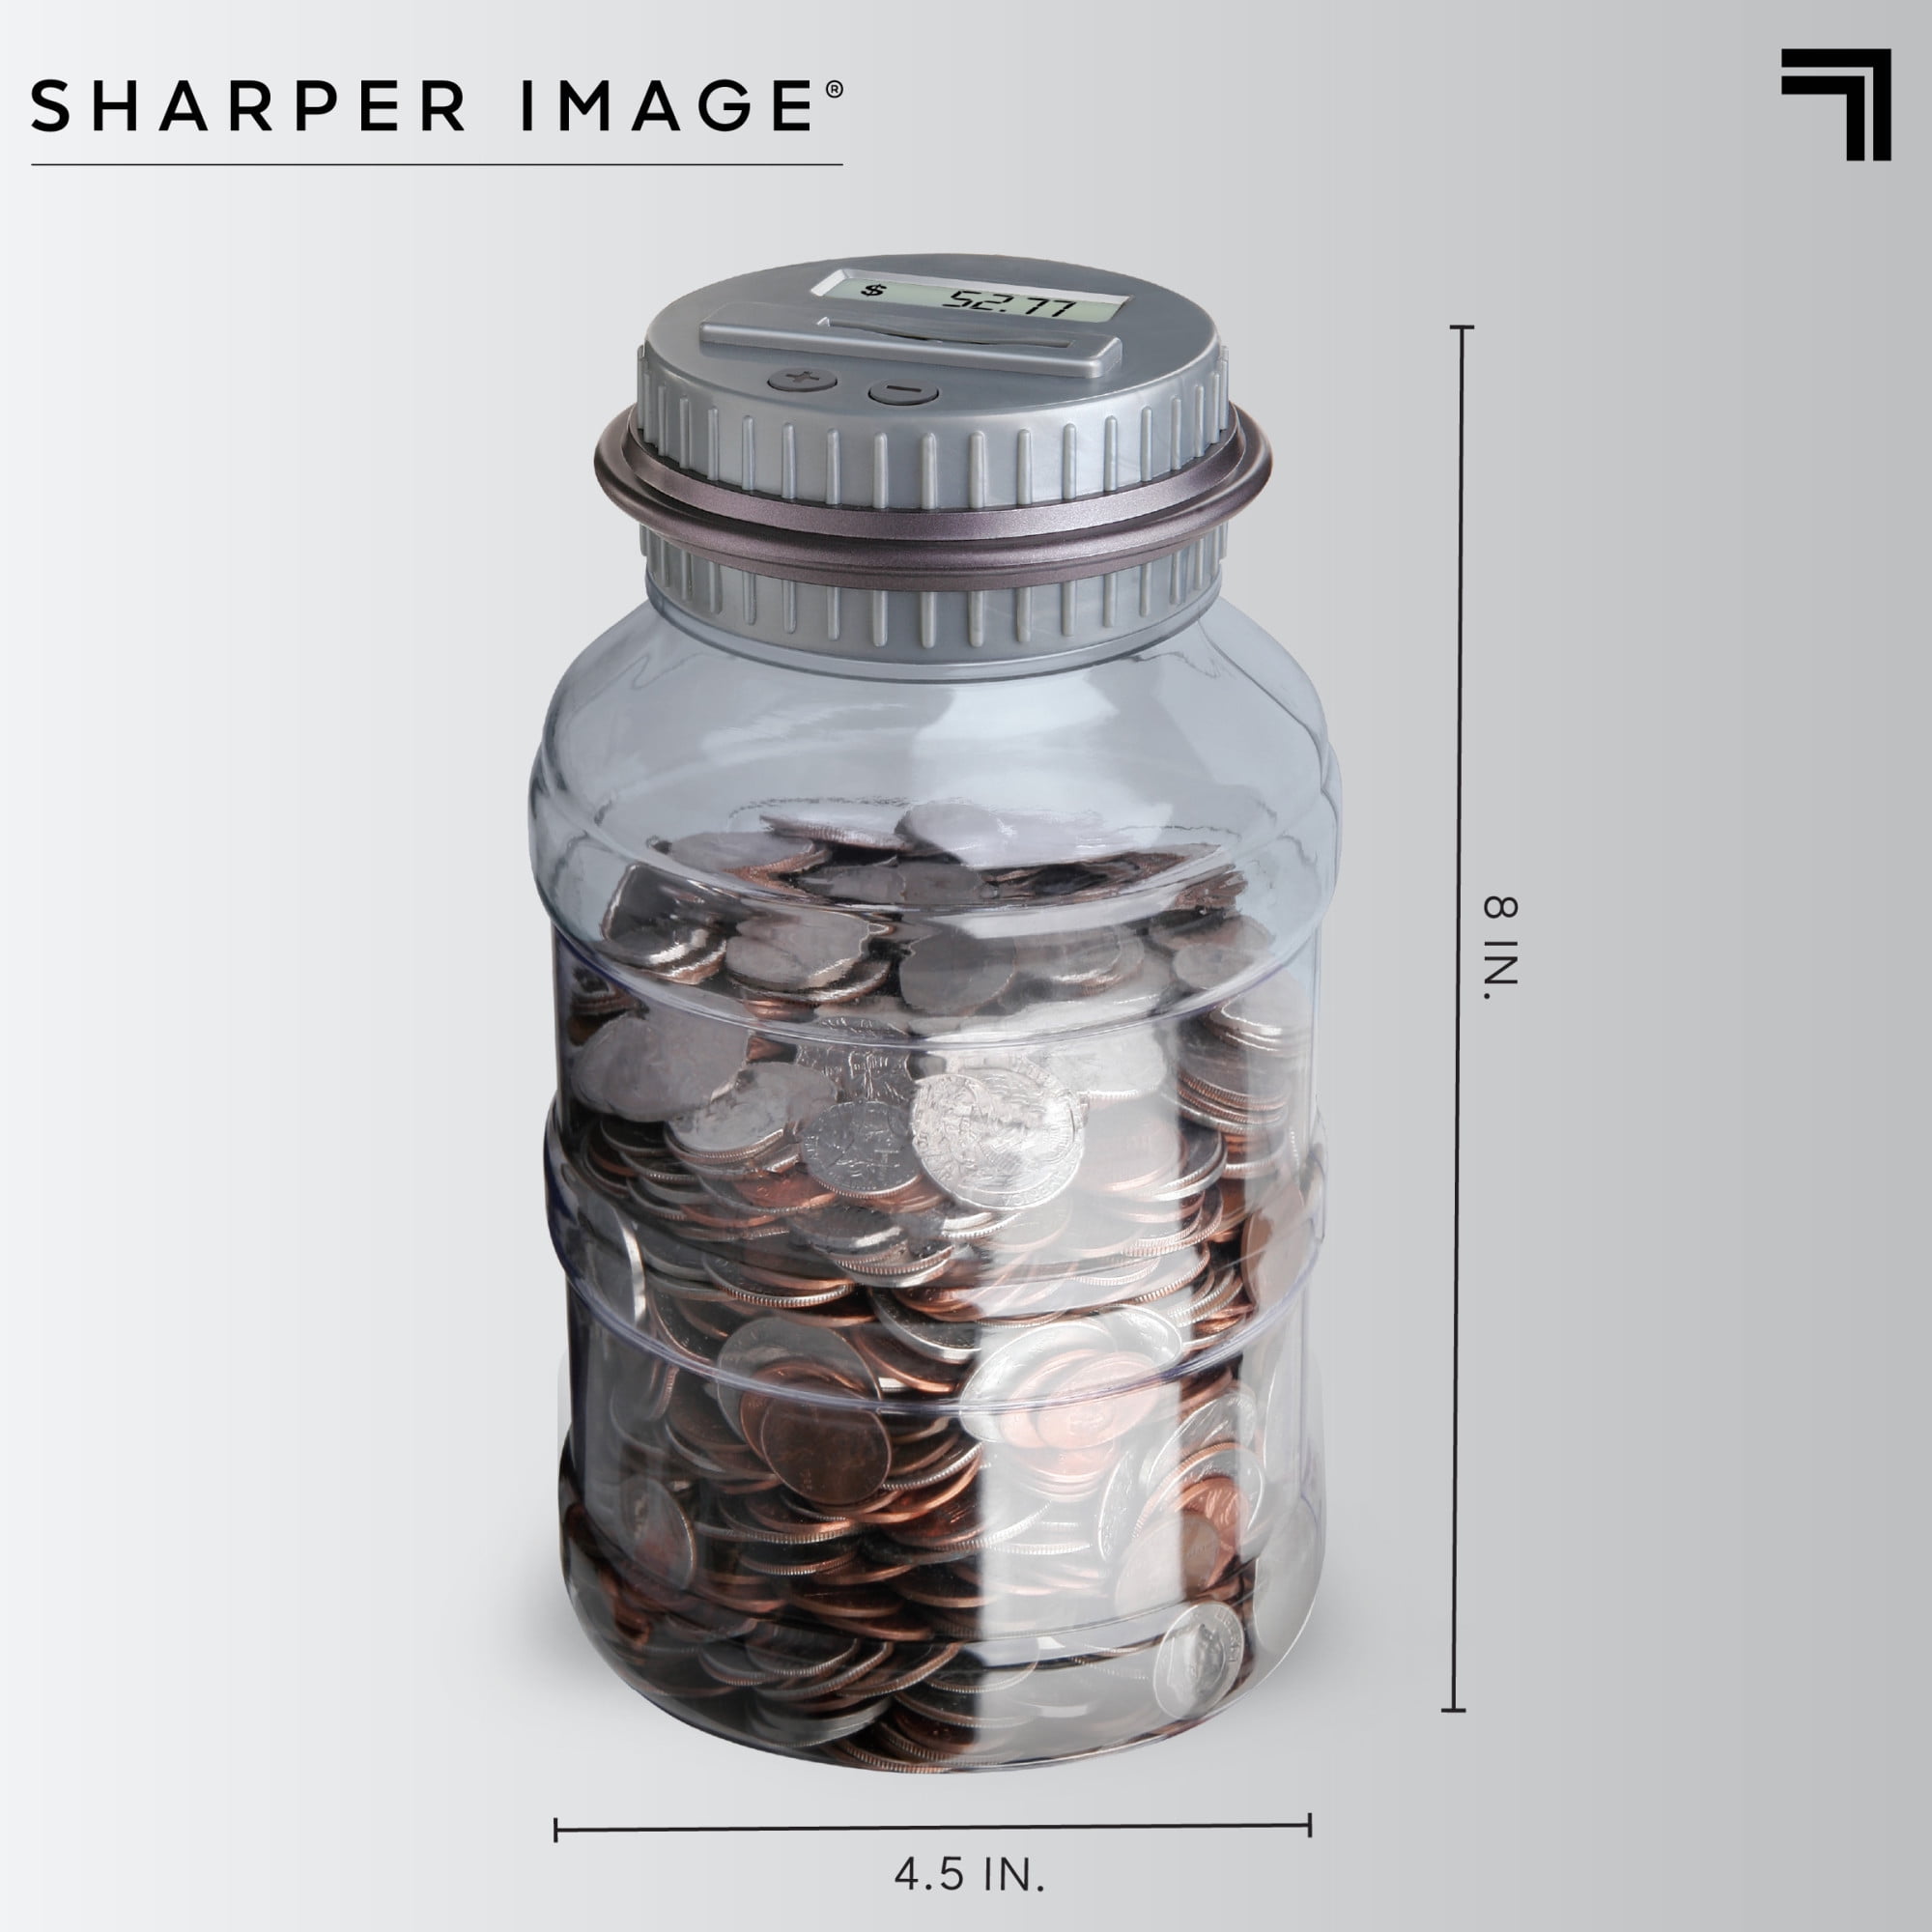 SHARPER IMAGE Digital Counting Money Jar Piggy Bank w/LCD Display NIB MSP $19.99 